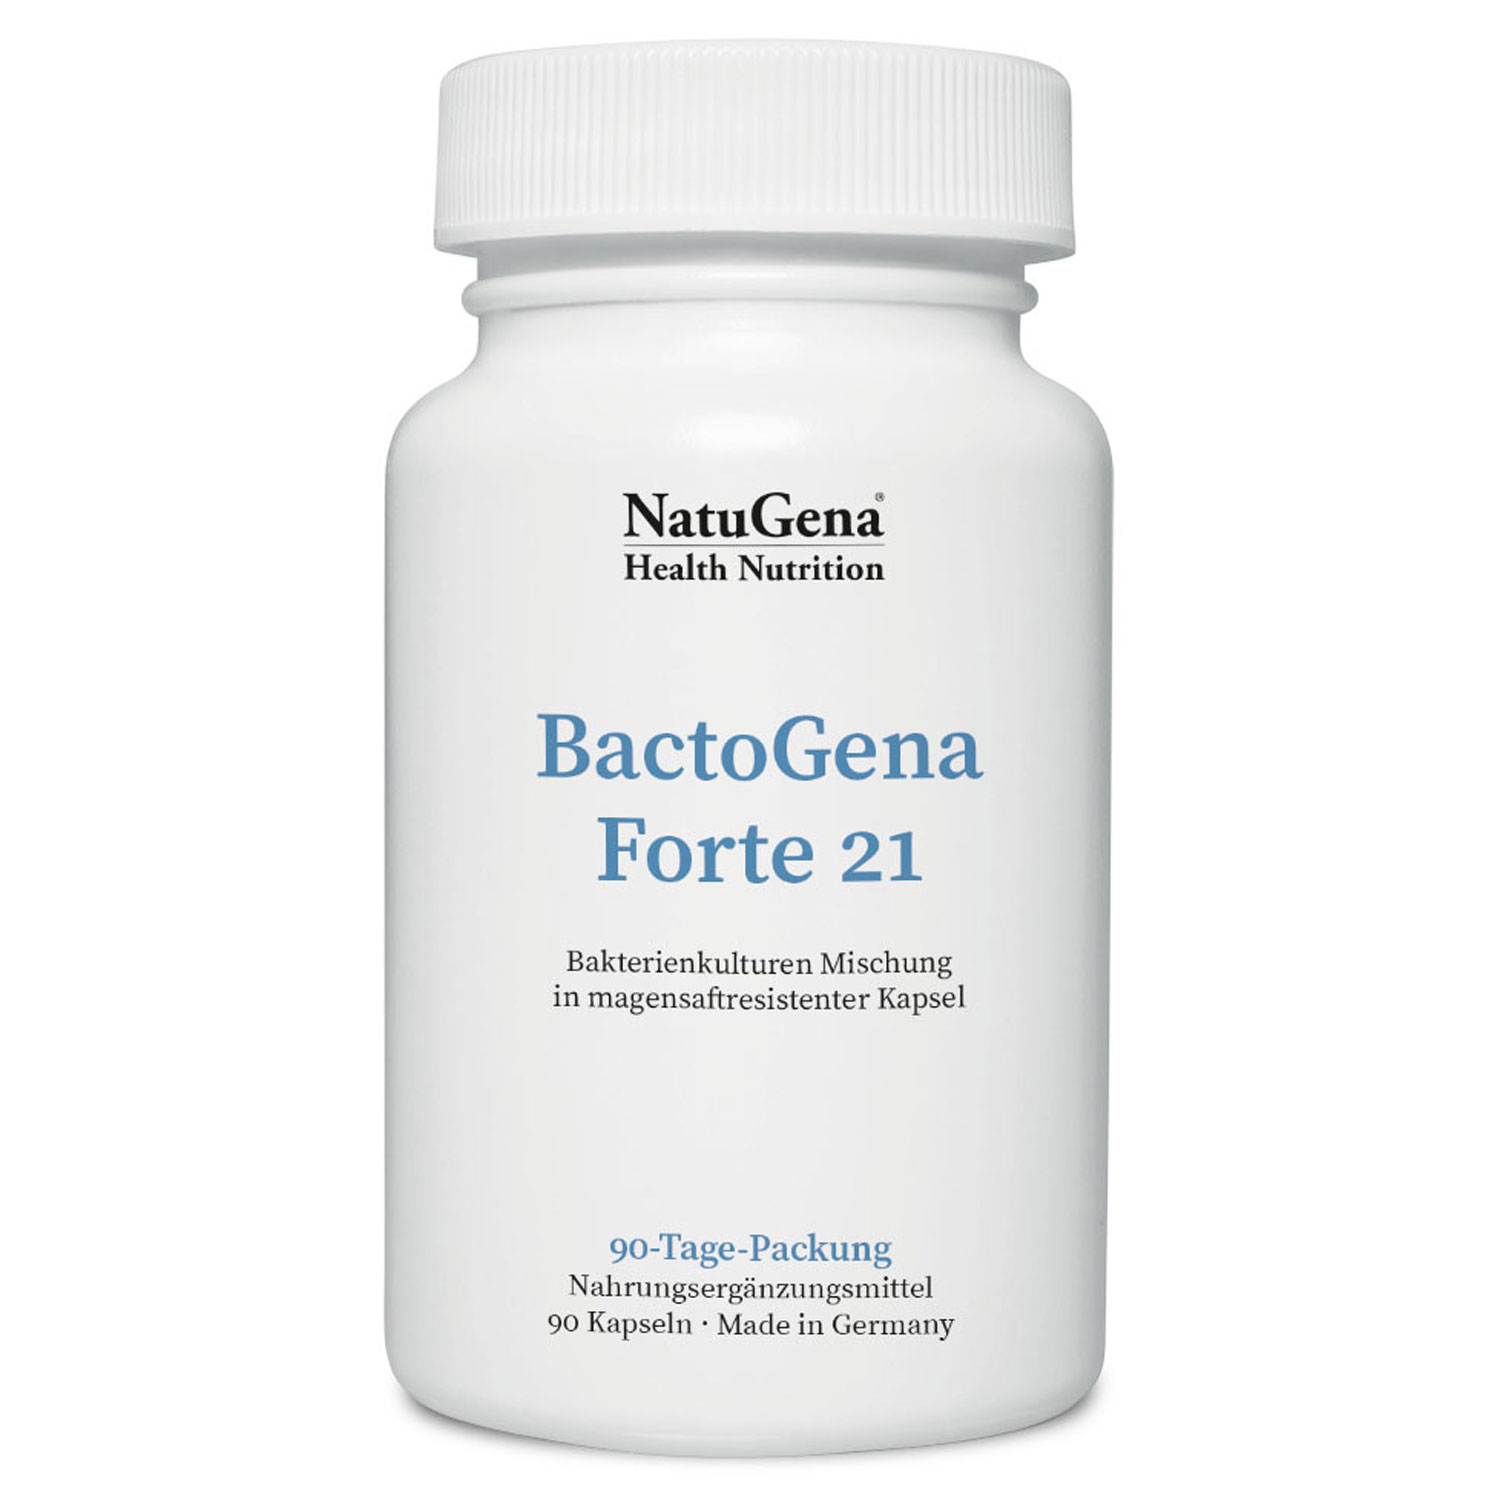 BactoGena Forte 21 von NatuGena - 90 Kapseln